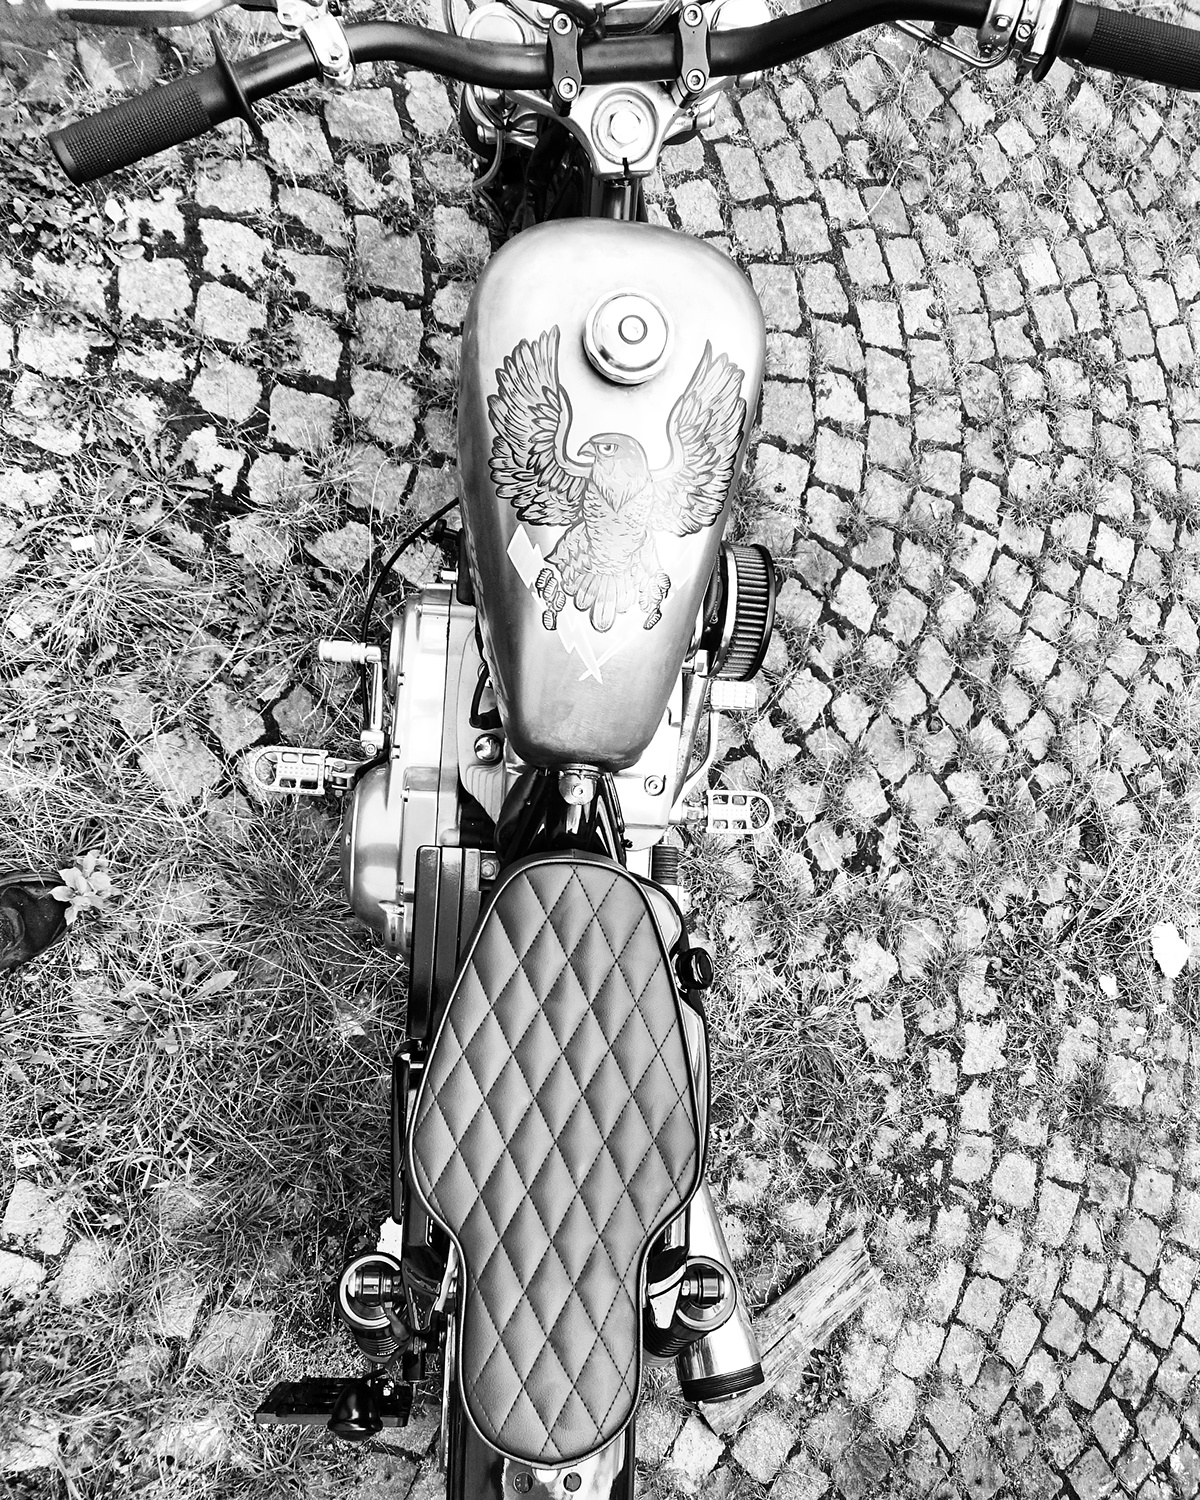 sportster Harley Davidson flat track motorcycle